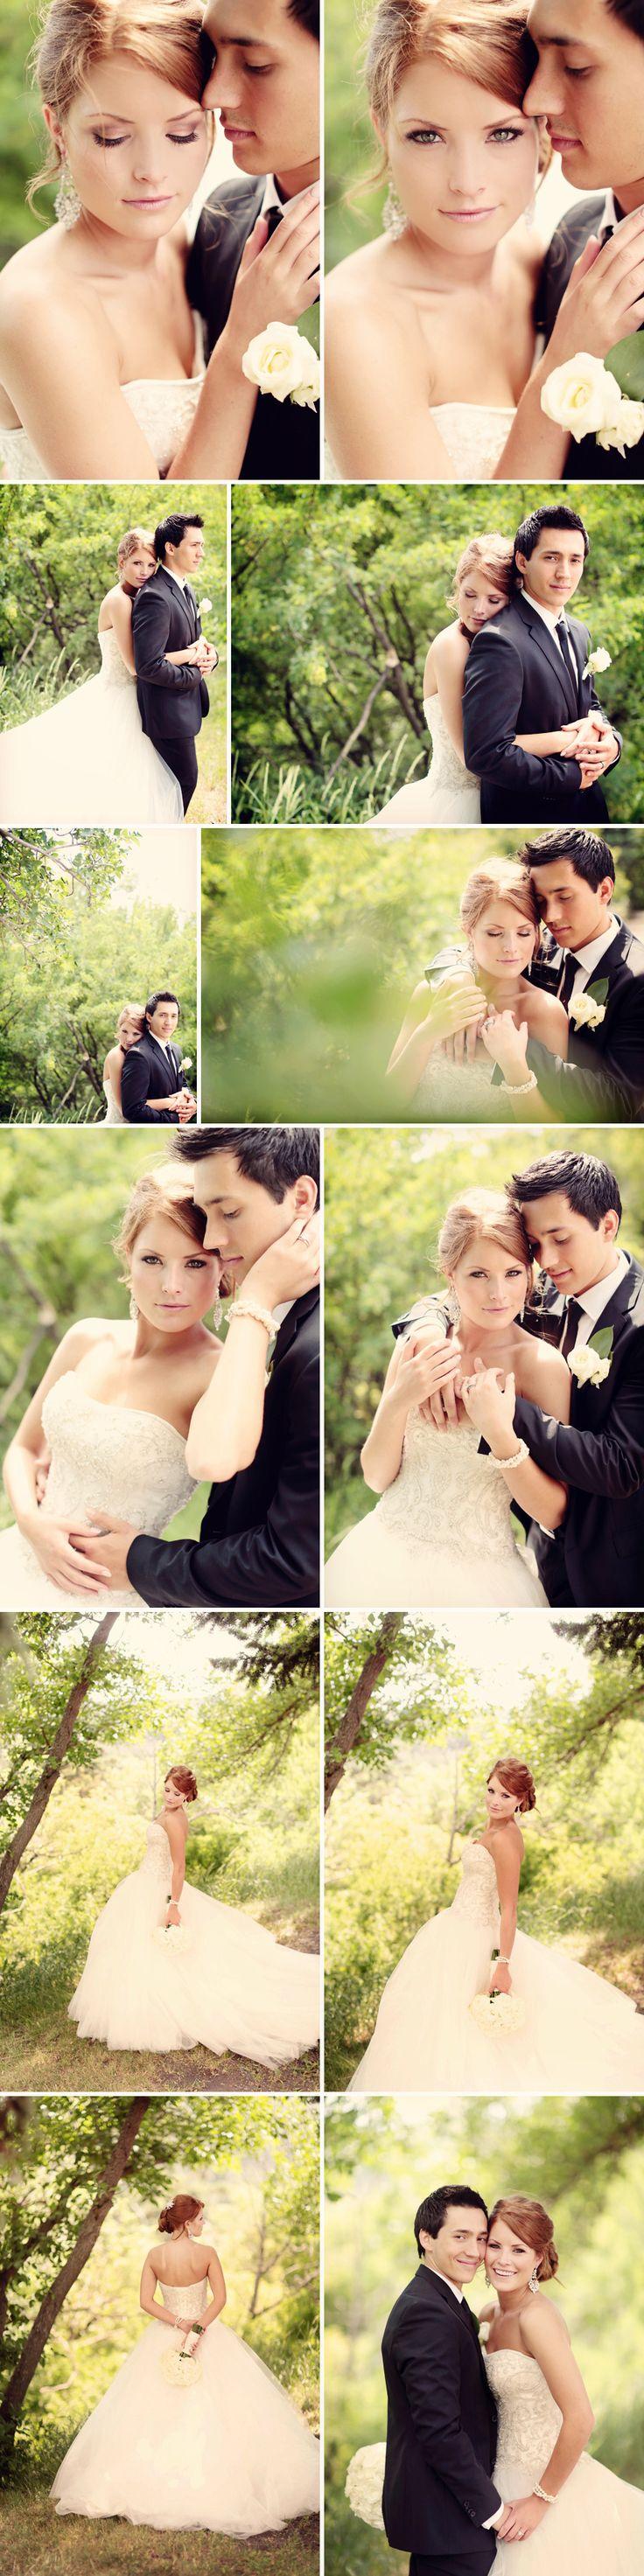 زفاف - Edmonton Wedding Photographer Blog